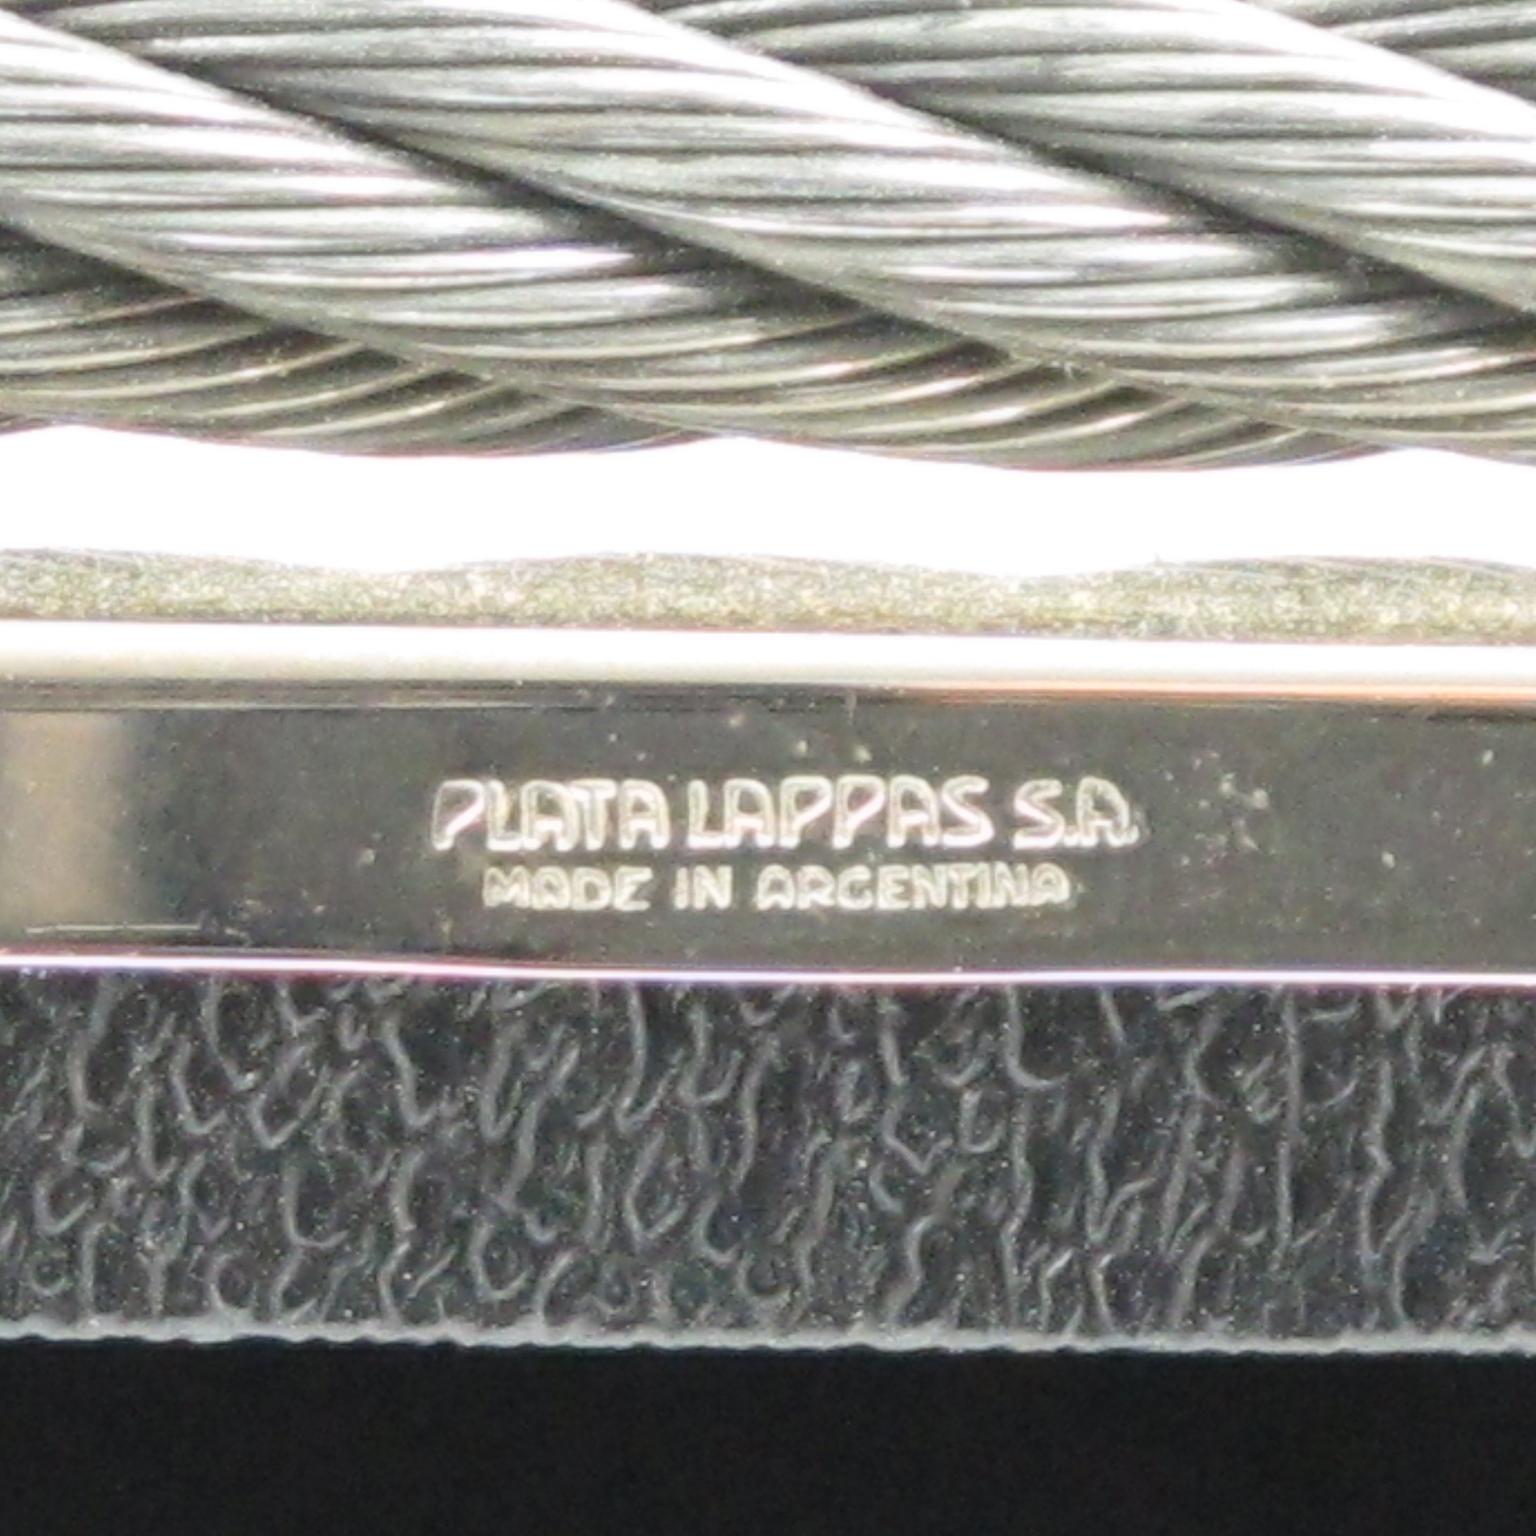 Argentine Plata Lappas Argentina Silver Plate Picture Frame